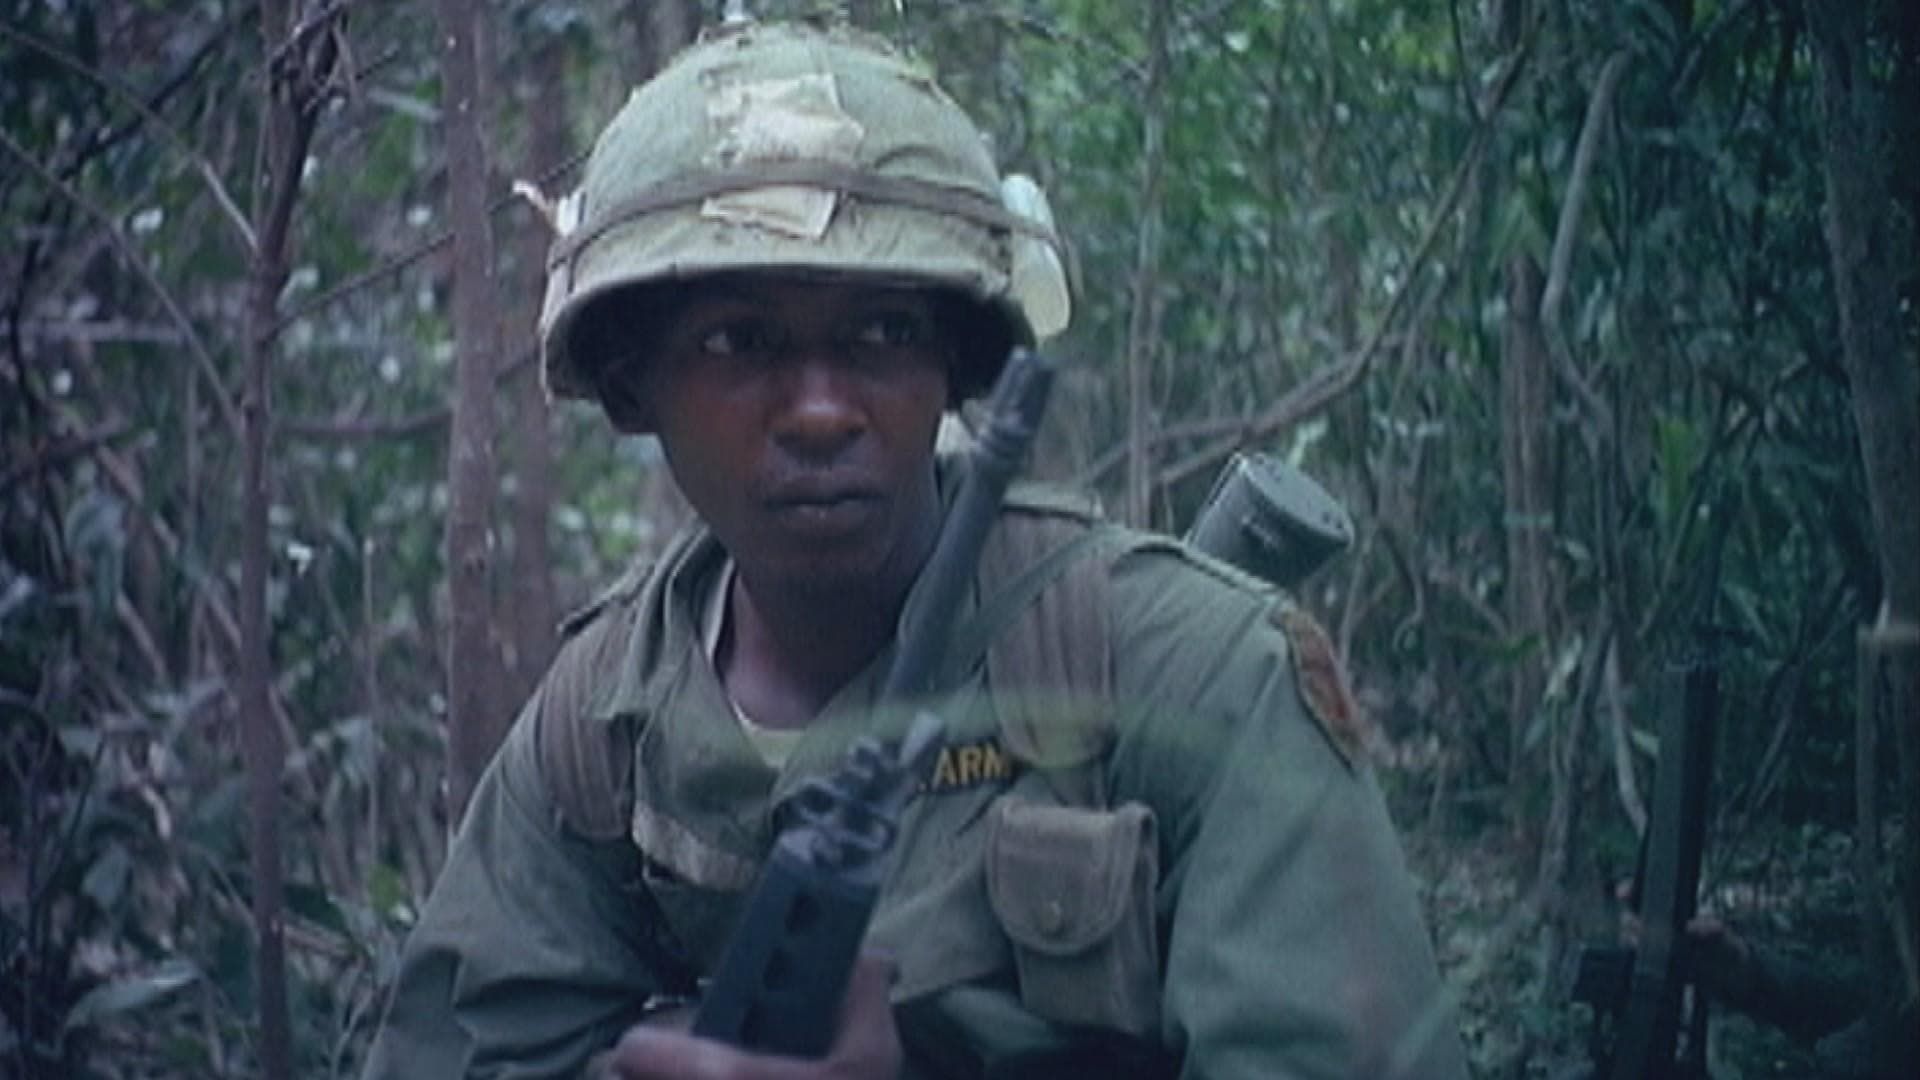 Vietnam War Story: The Last Days background